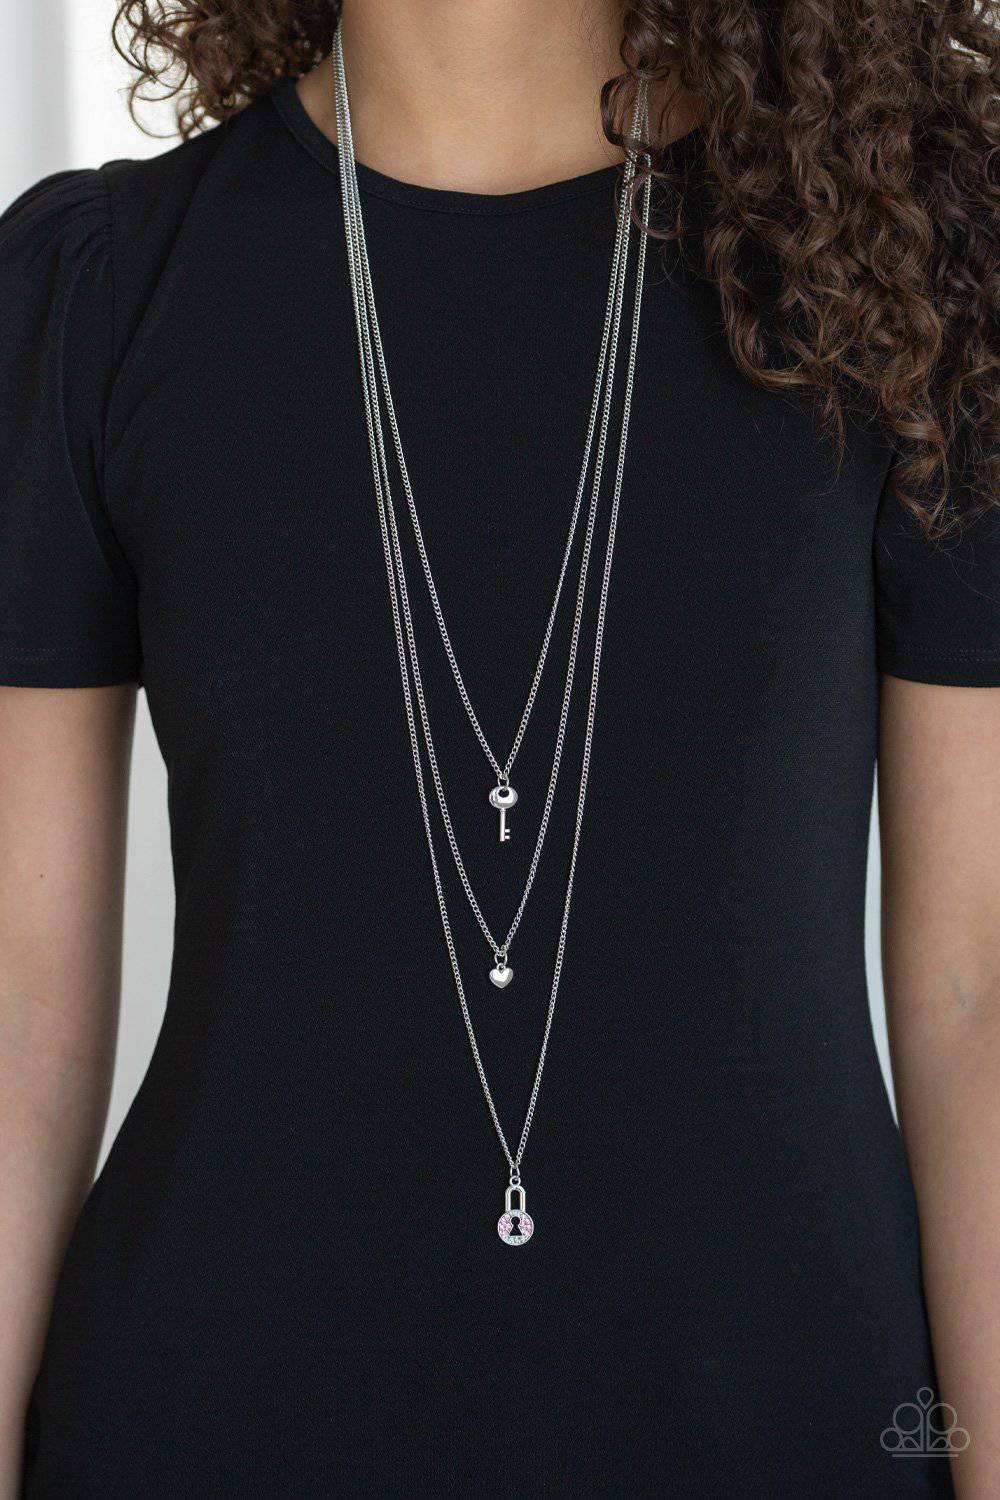 Secret Heart - Pink Key & Heart Rhinestone Necklace - Paparazzi Accessories - GlaMarous Titi Jewels